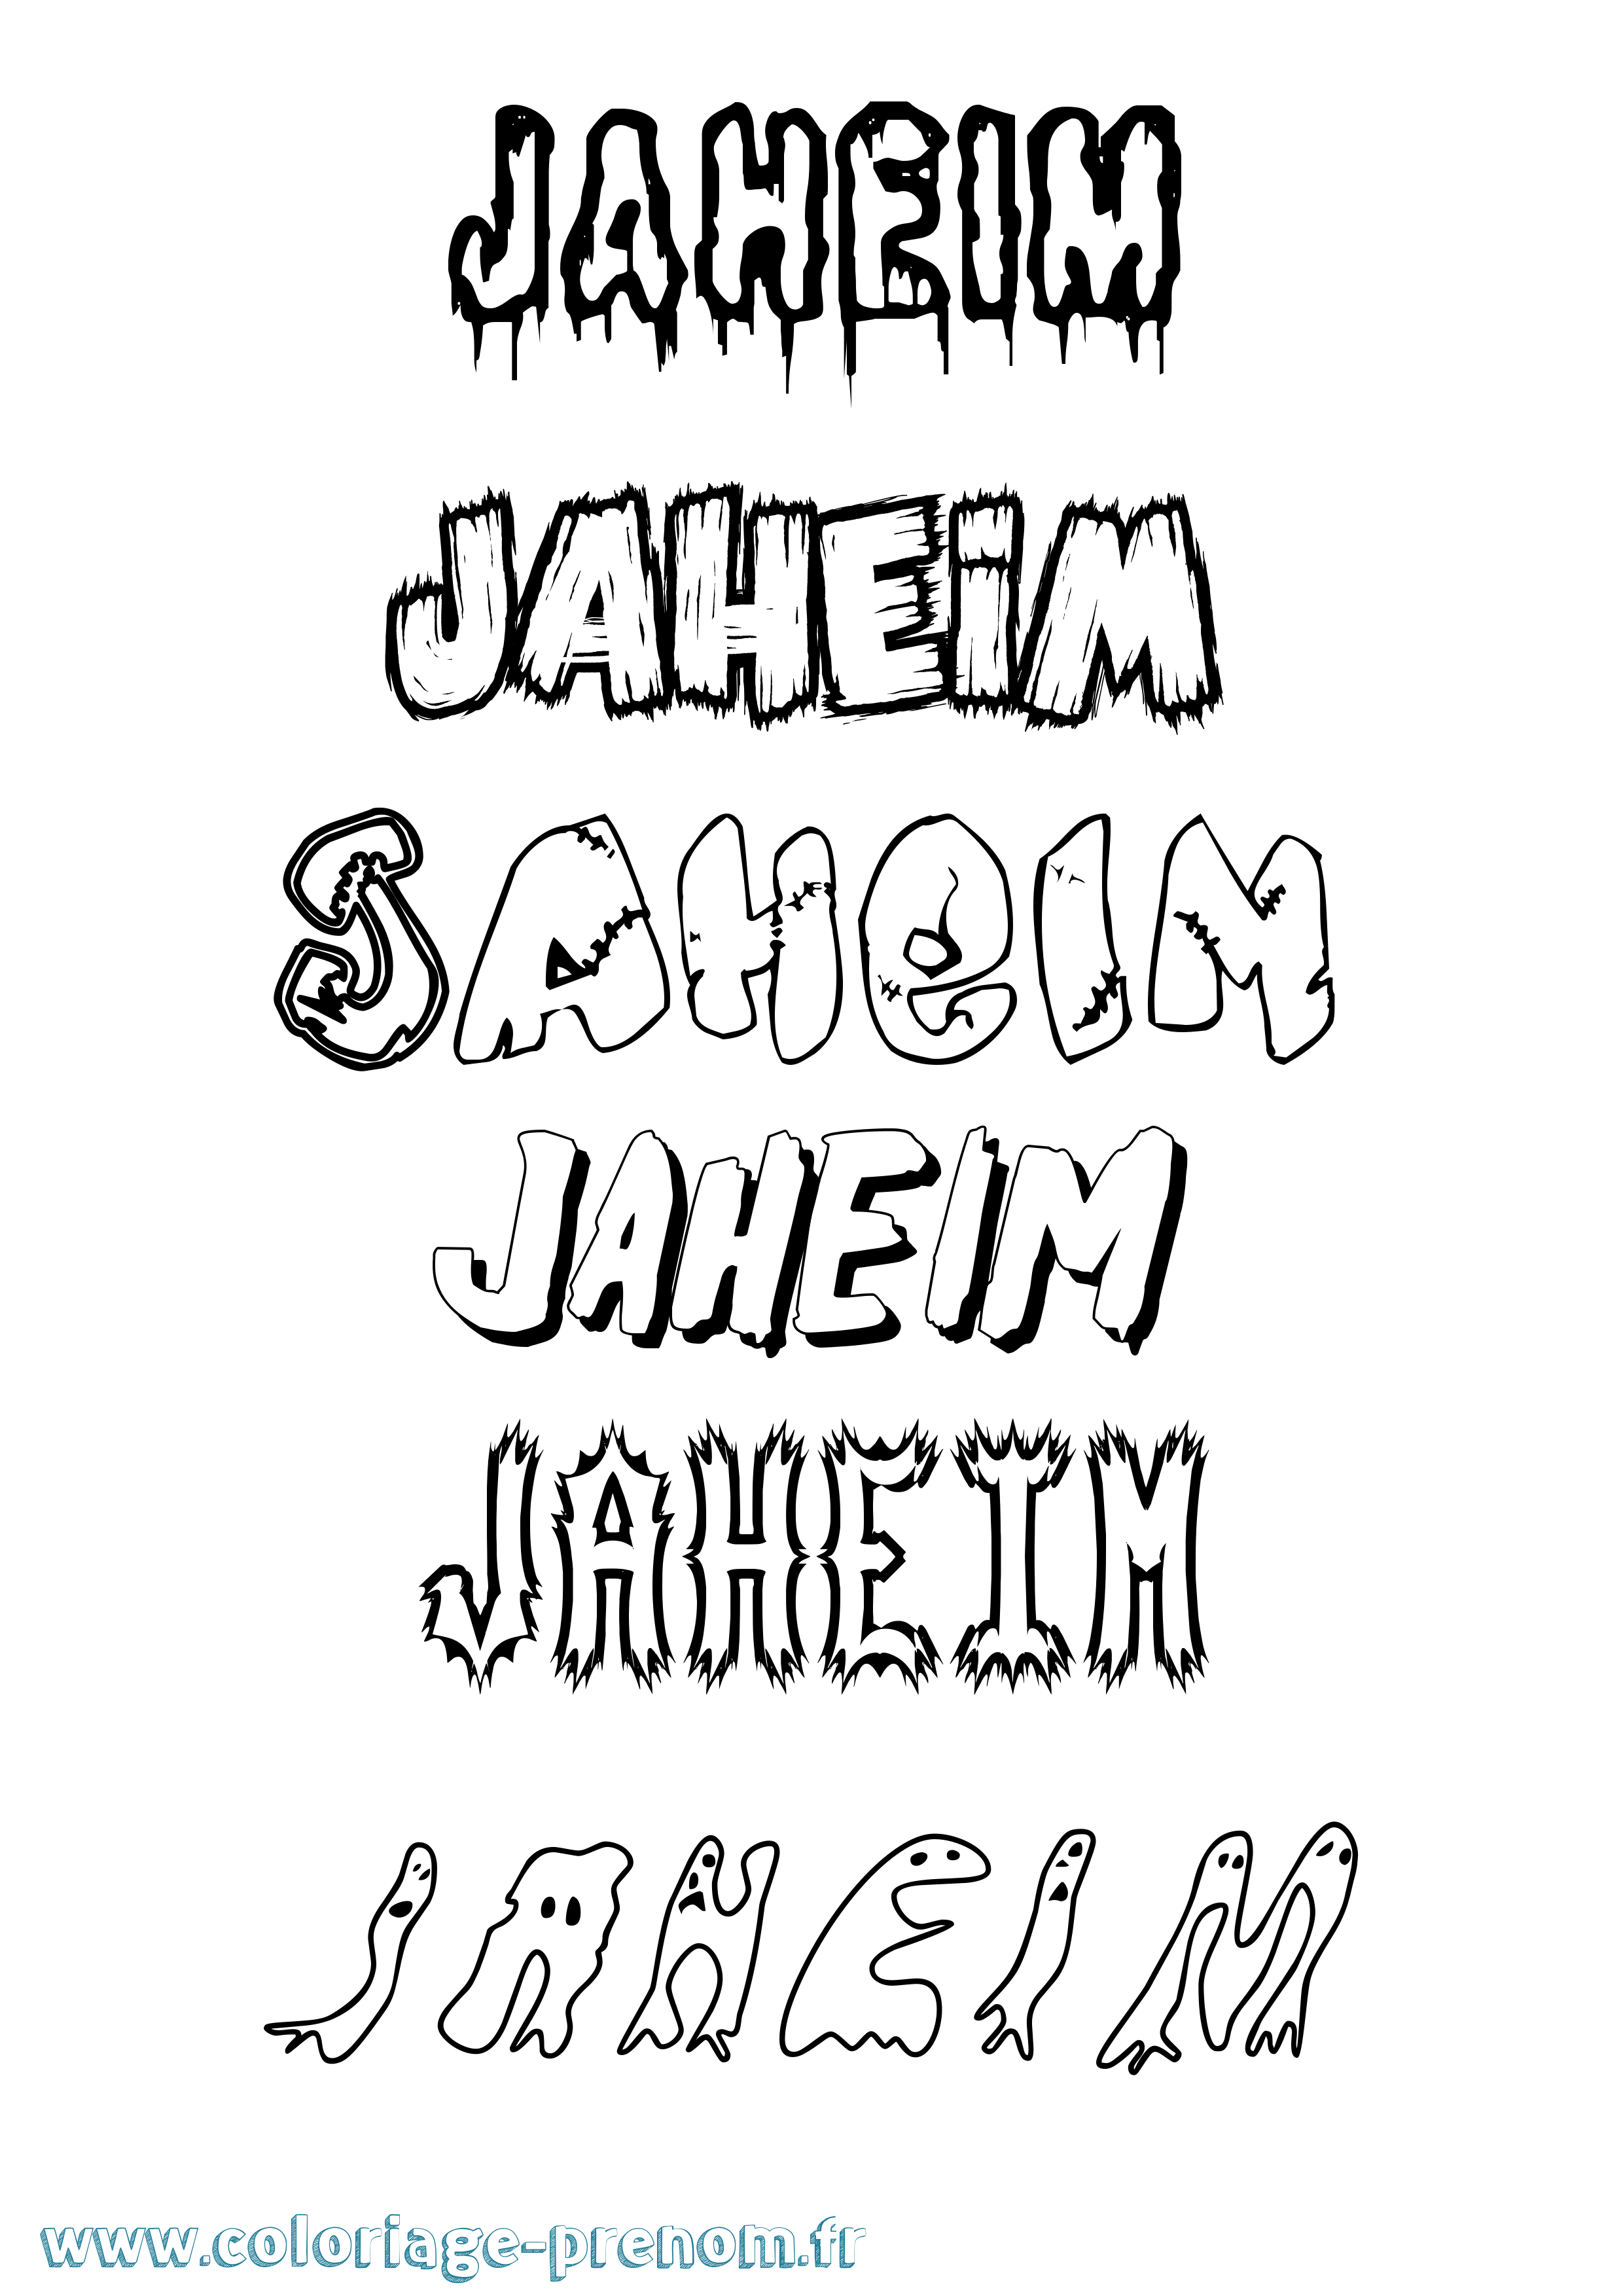 Coloriage prénom Jaheim Frisson